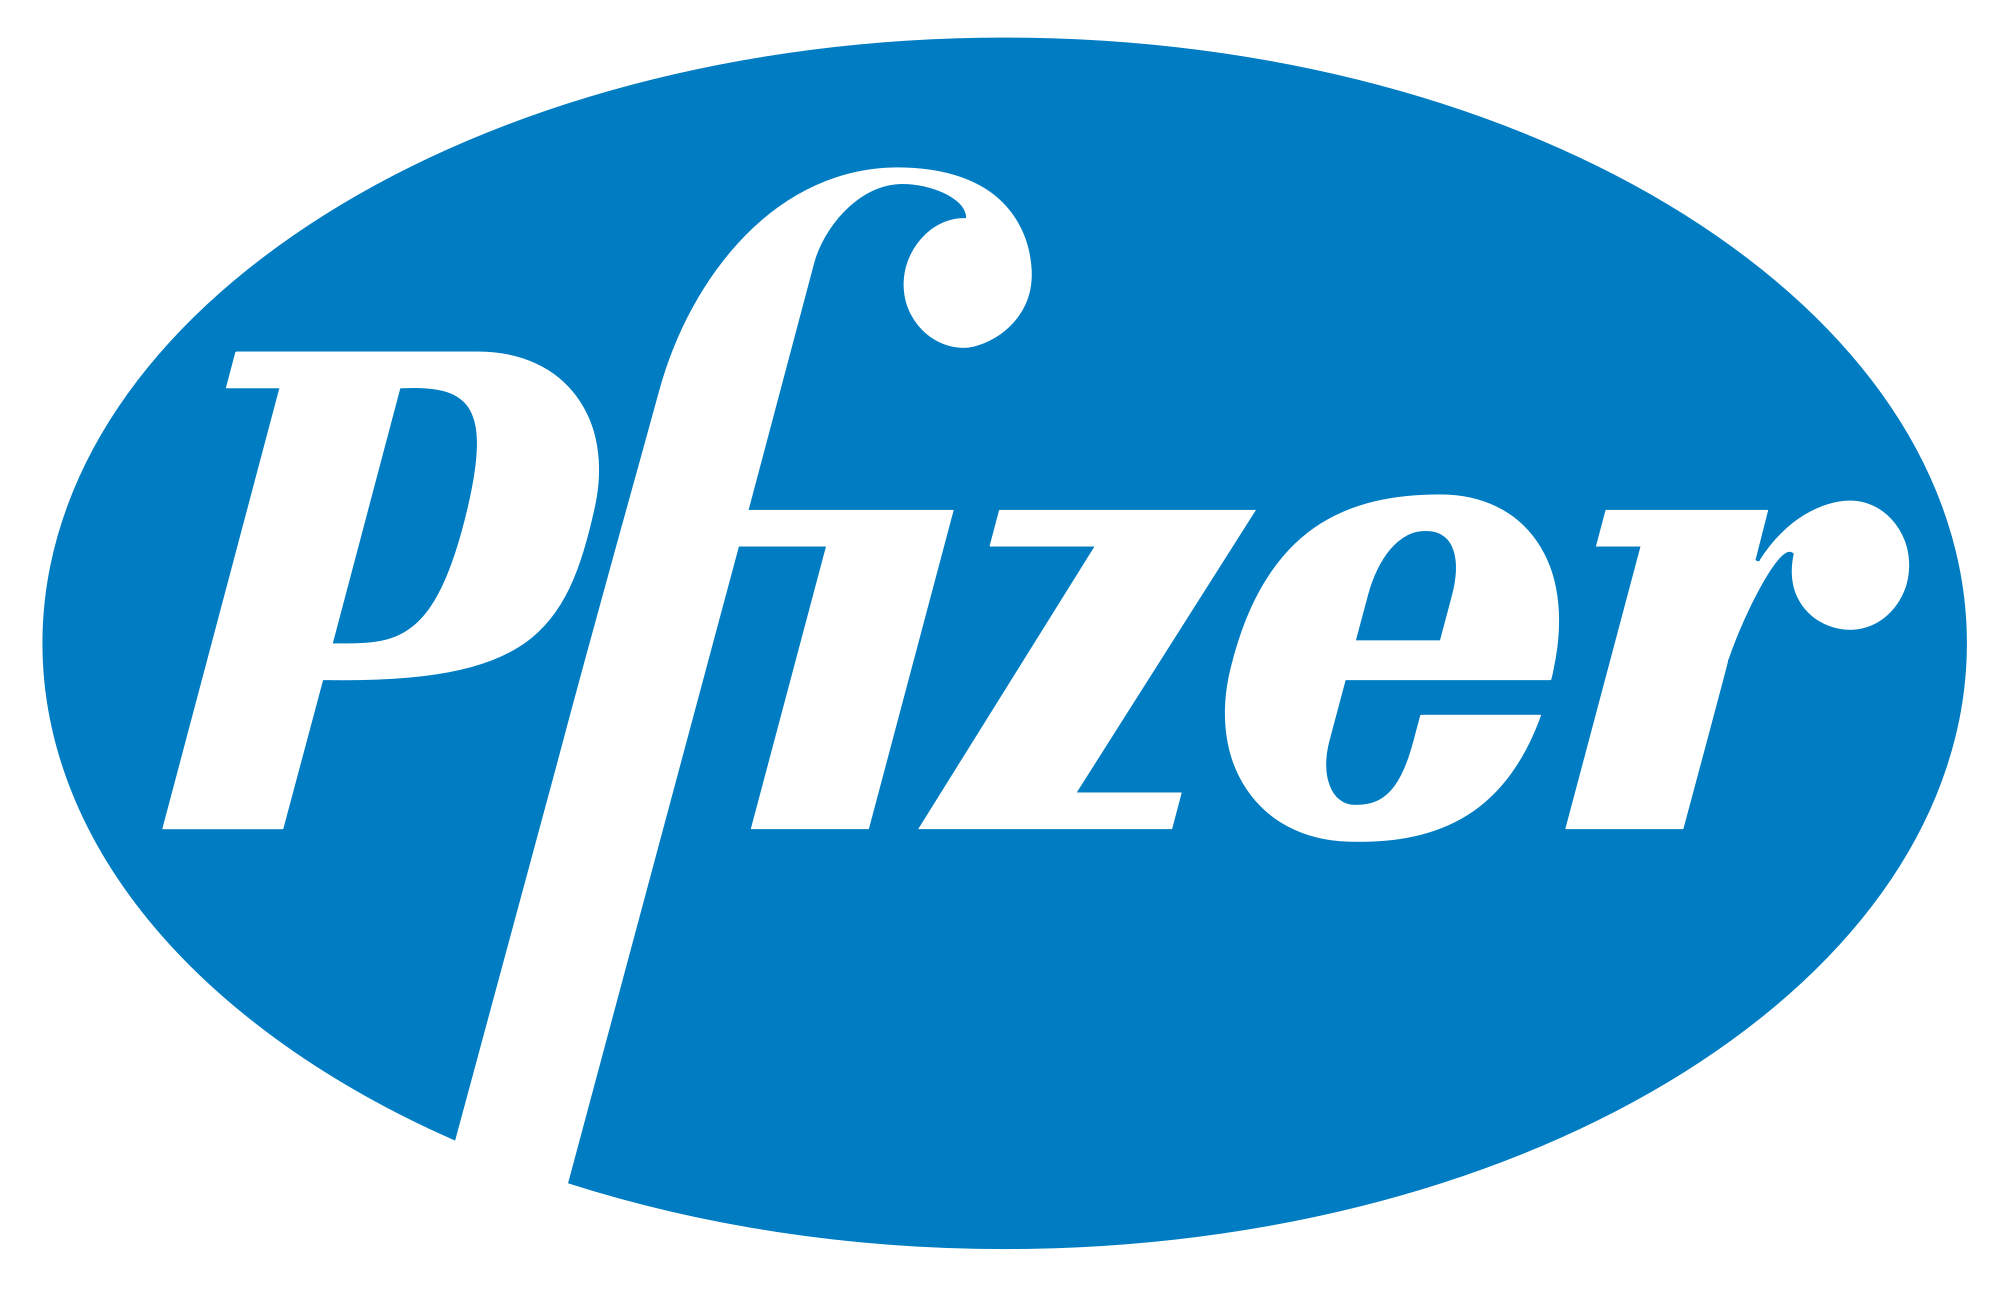 2000px-Pfizer_logo.svg_.png